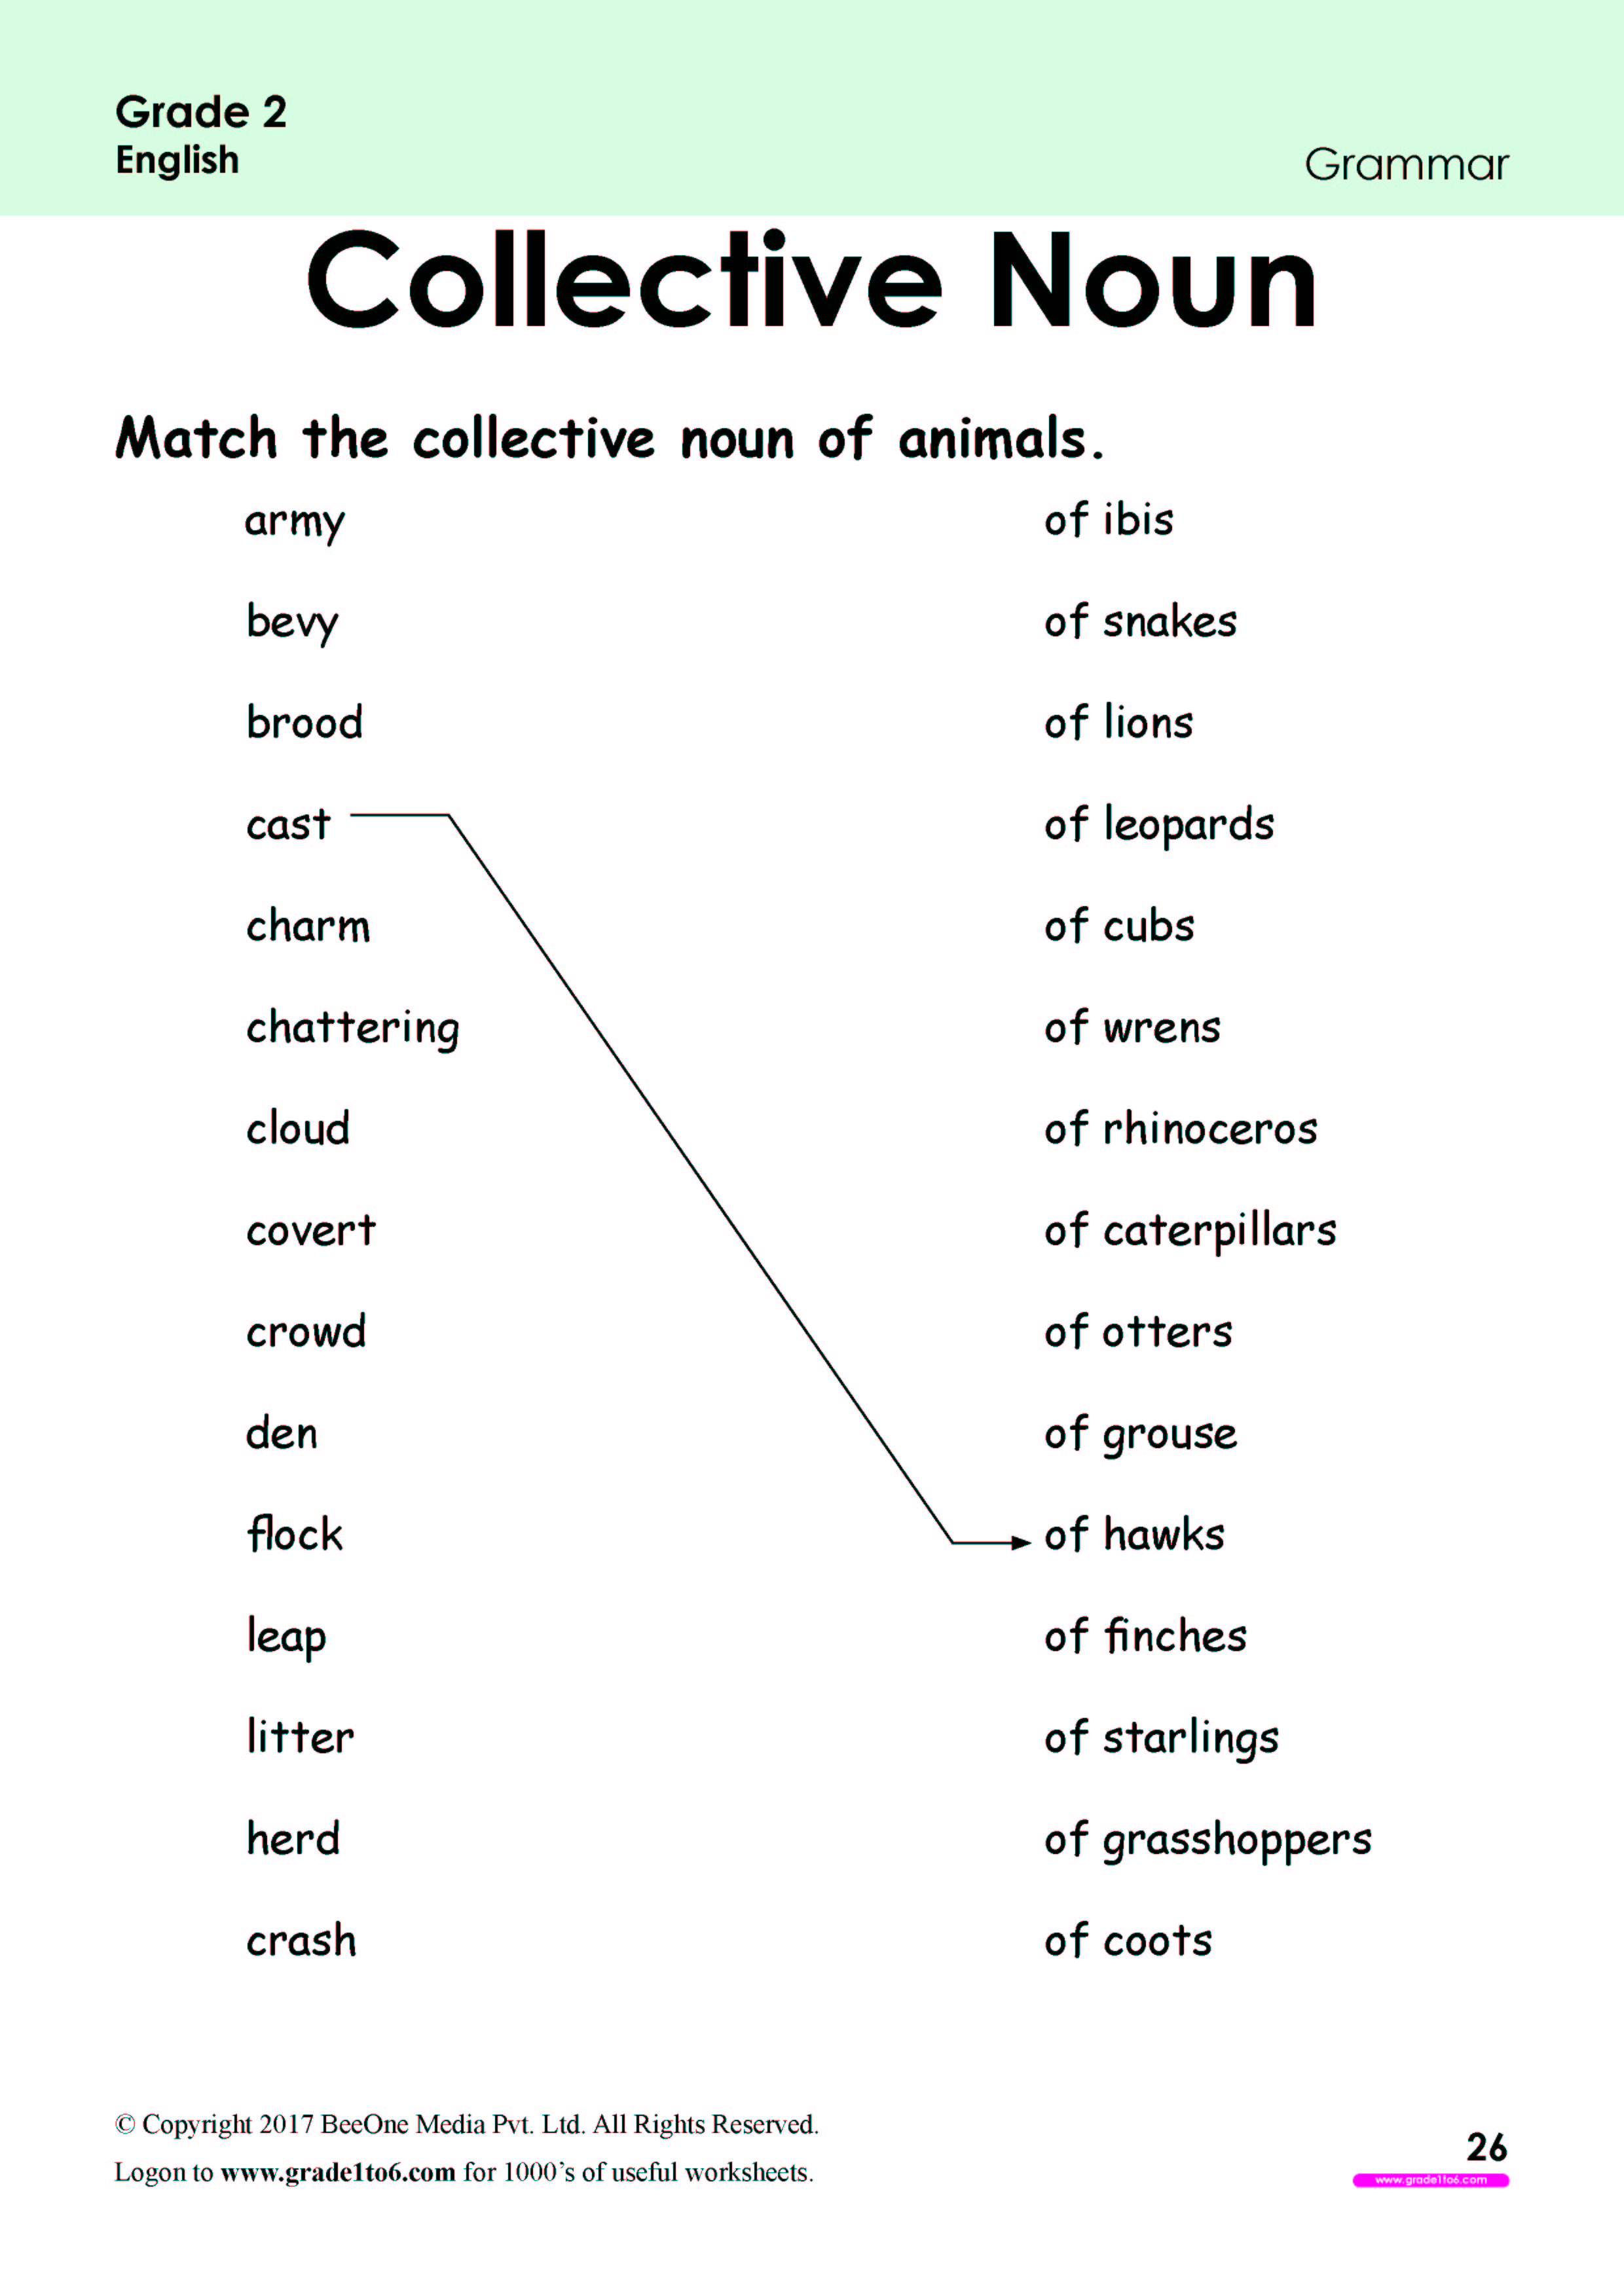 Collective Nouns Worksheets For Grade 3 K5 Learning Writing Collective Nouns Worksheets K5